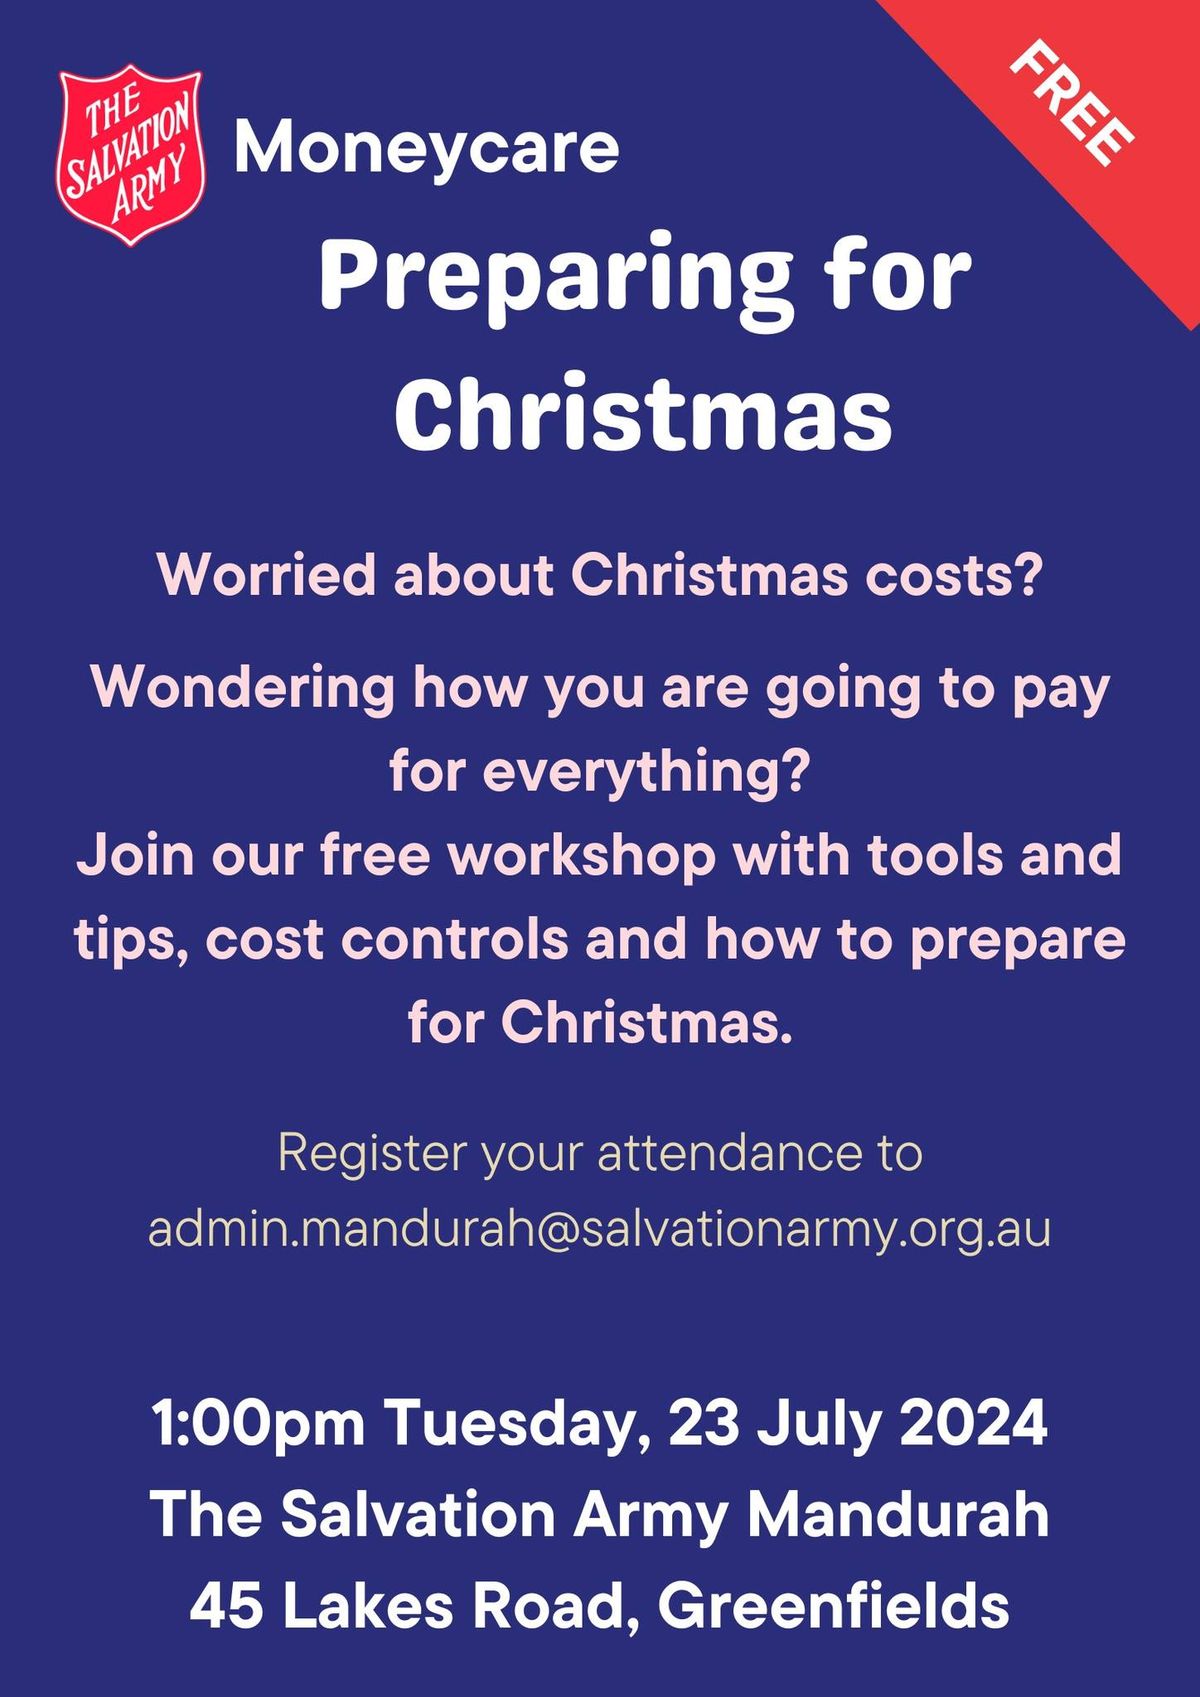 Moneycare Workshop for Christmas Preparation